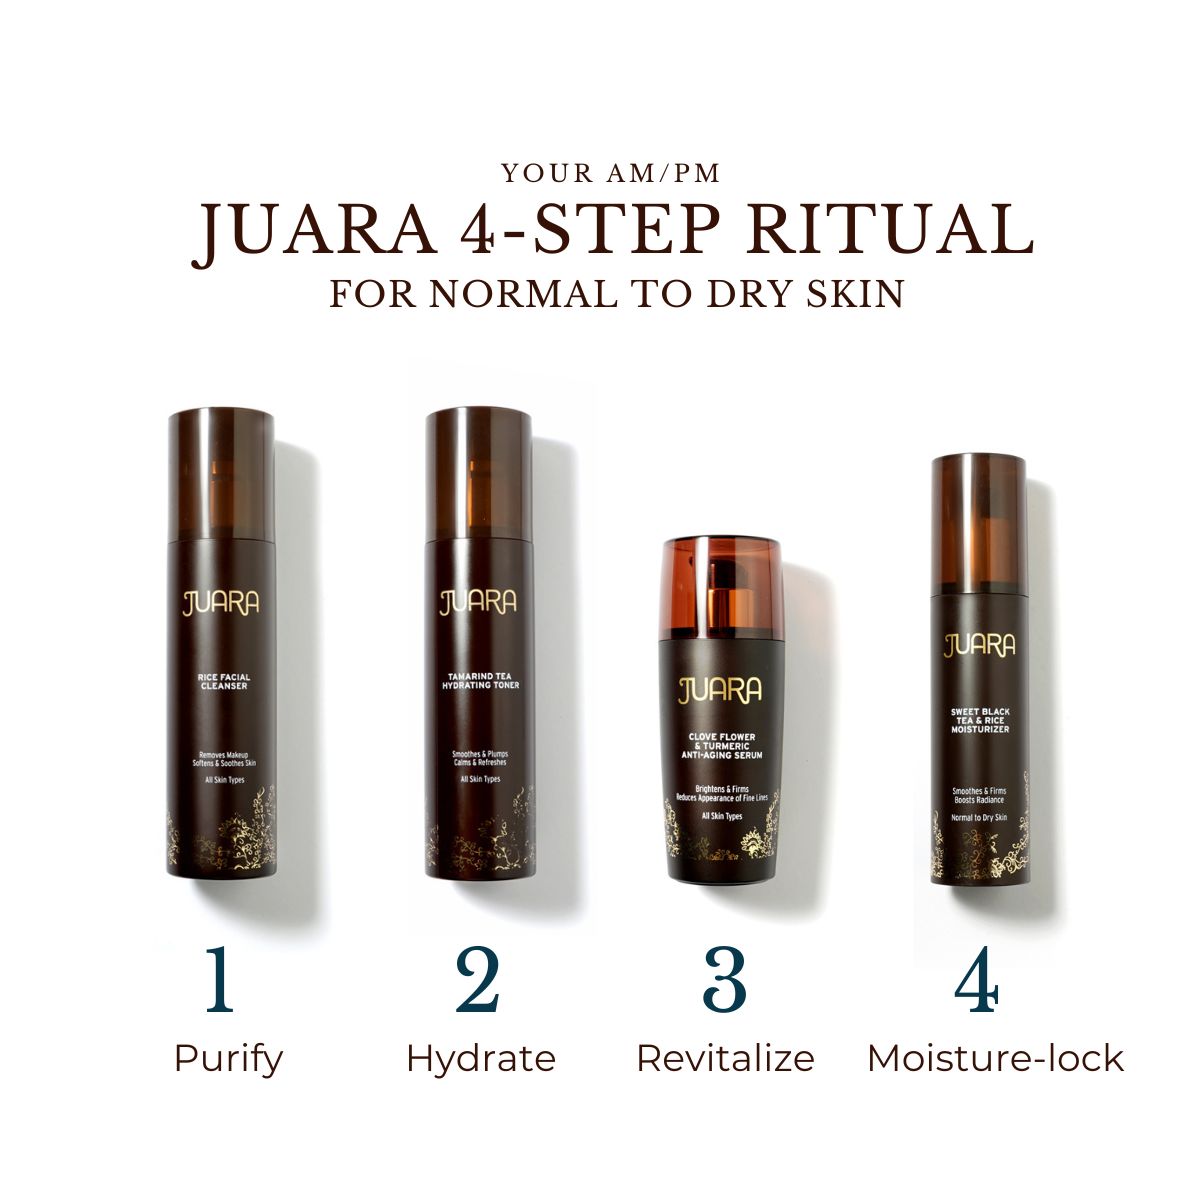 The JUARA Face Ritual for Normal To Dry Skin from JUARA Skincare